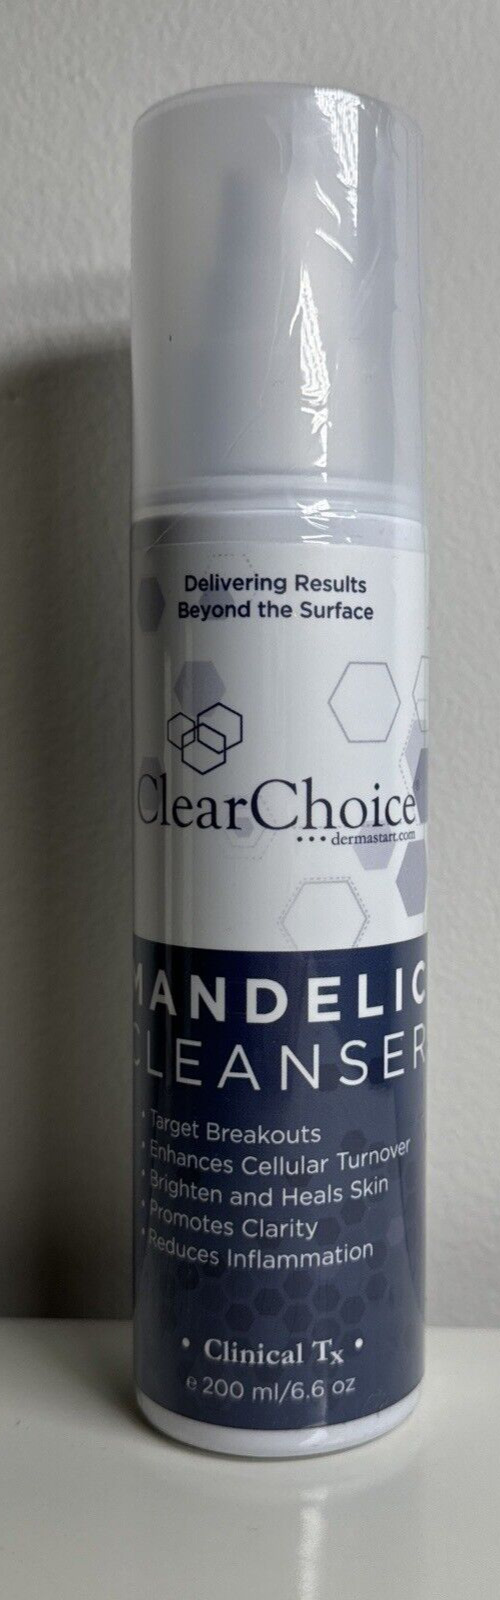 Clear Choice Gentle Mandelic Cleanser 200 ml / 6.6 FL OZ new